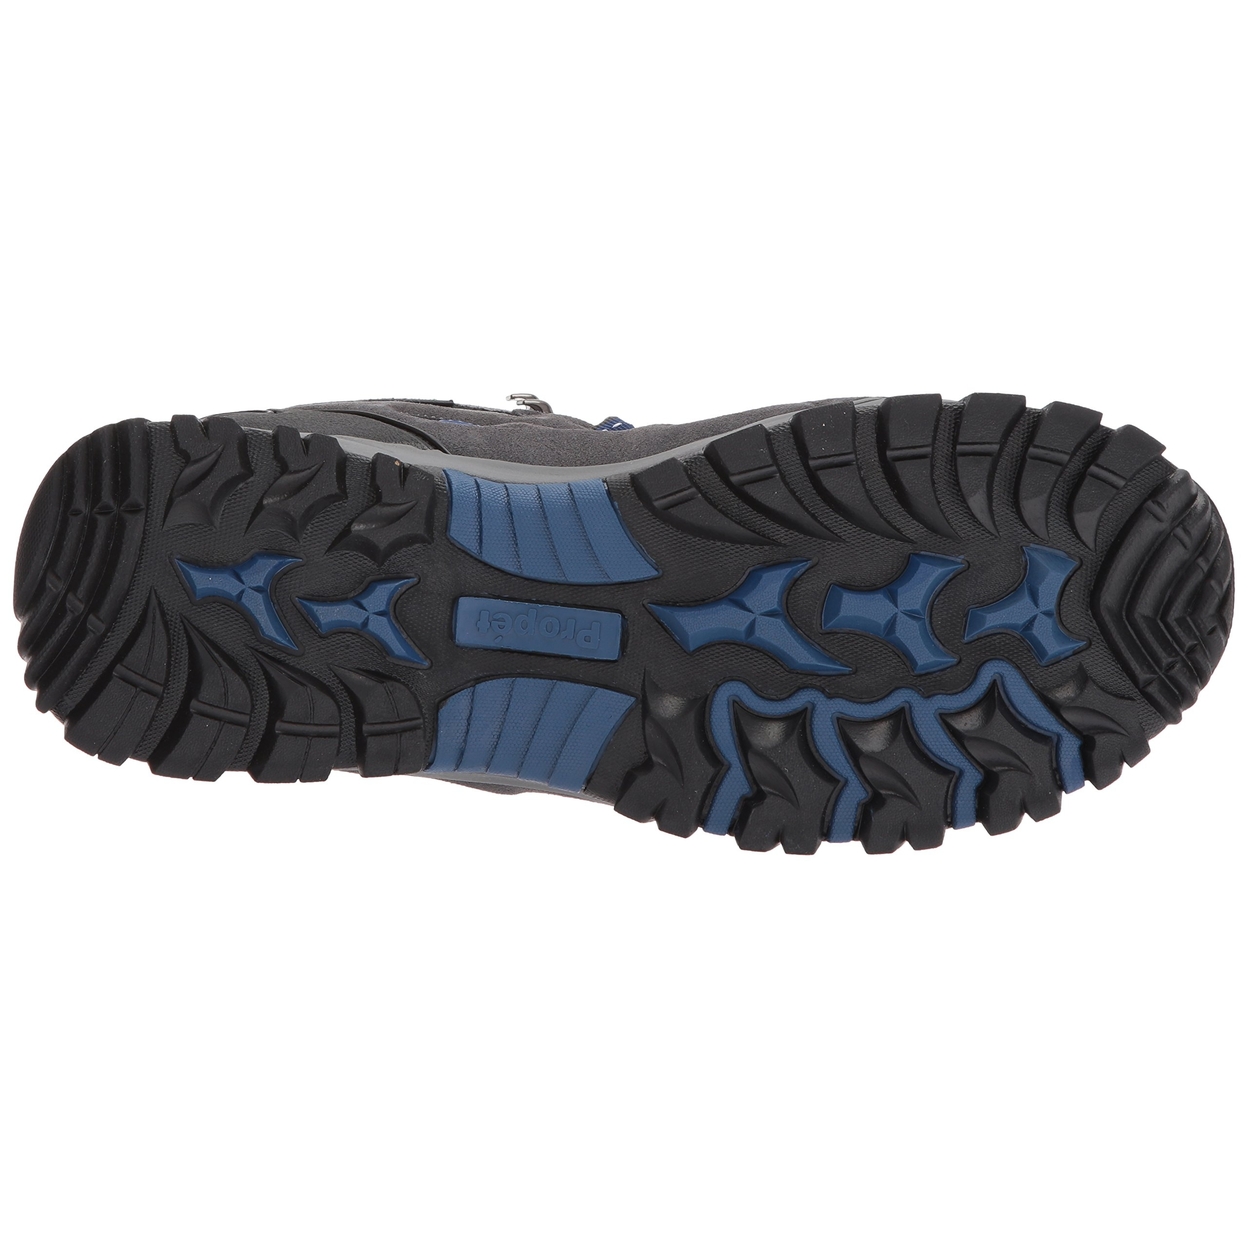 Propet Men's Ridge Walker Hiking Boot Grey/Blue - M3599GRB GREY/BLUE - GREY/BLUE, 11-2E